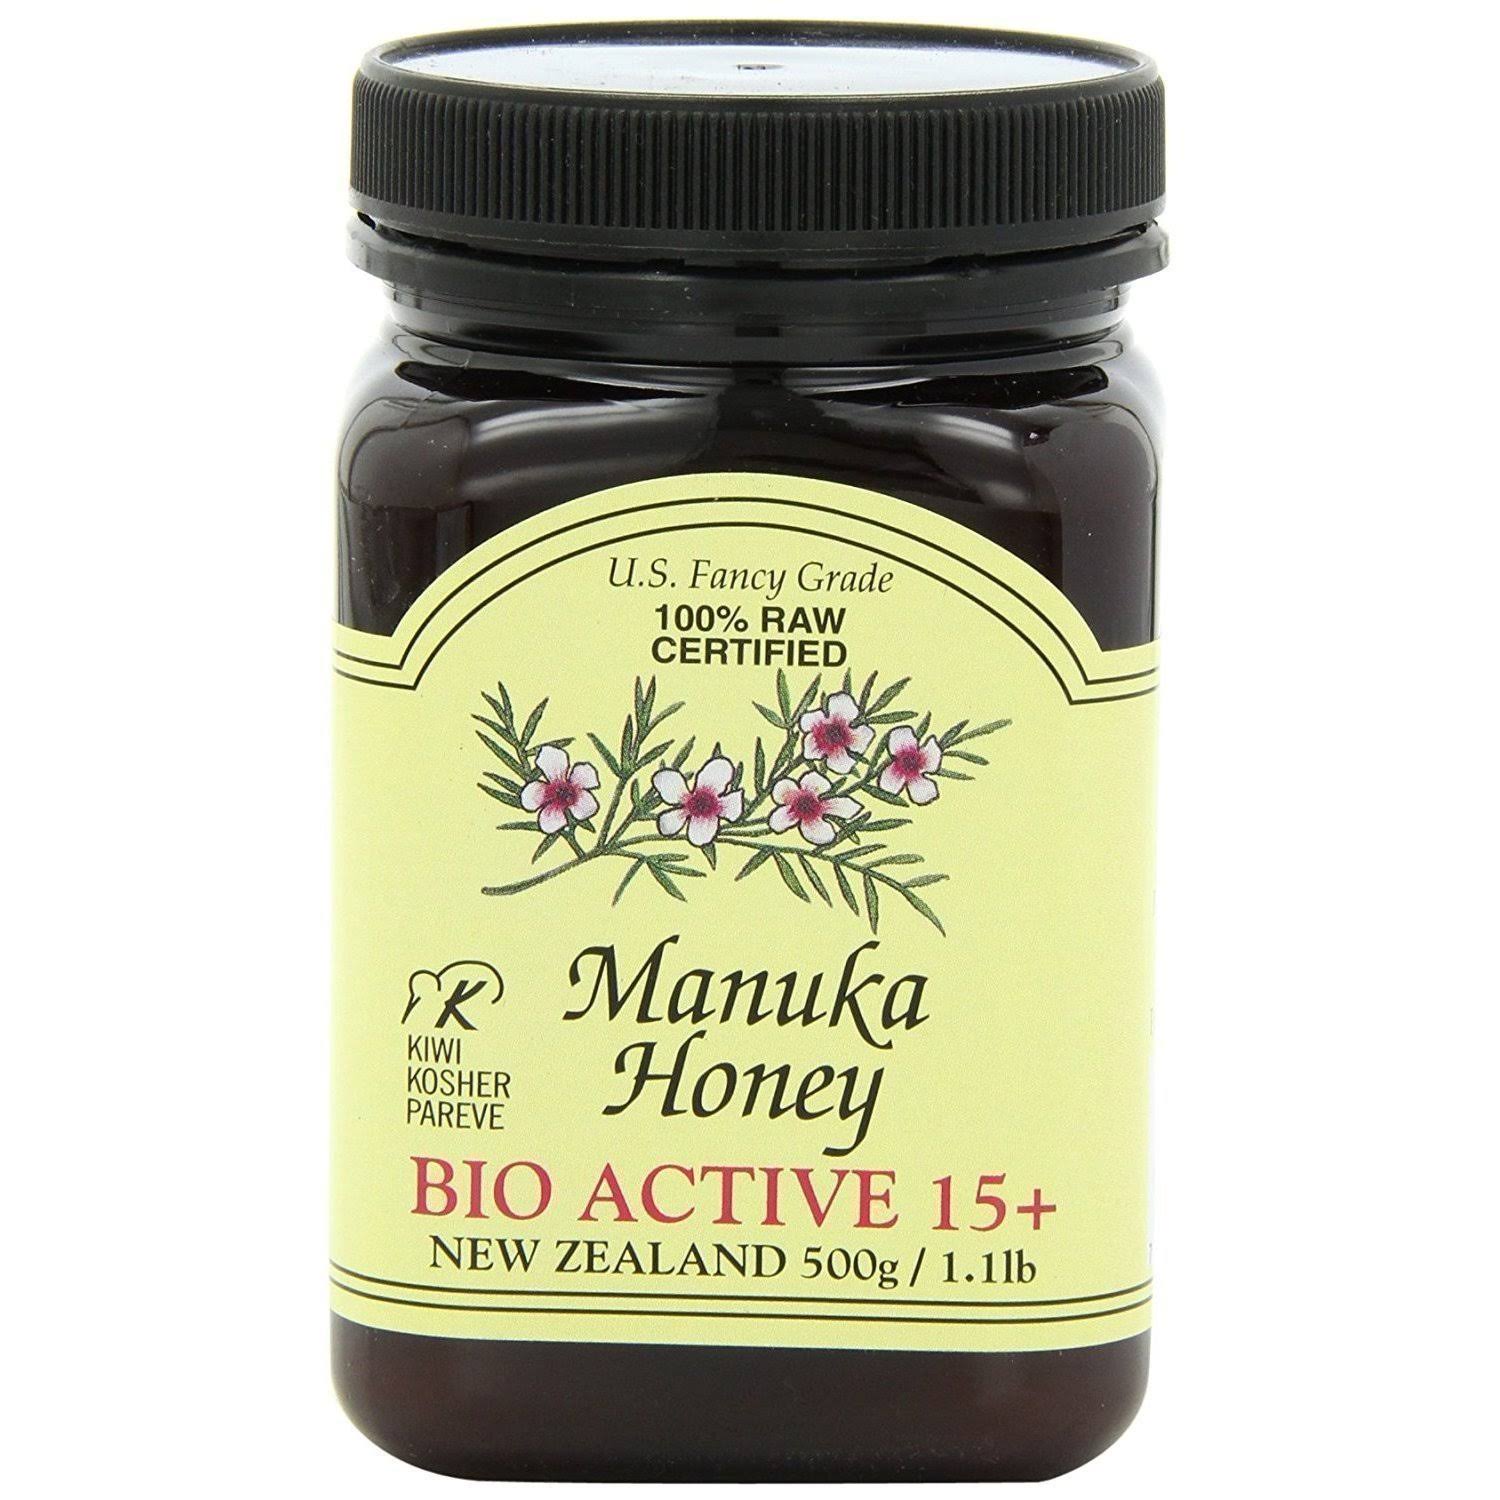 Pacific Resources Int. Manuka Honey, 15+ - 1.1 Lb